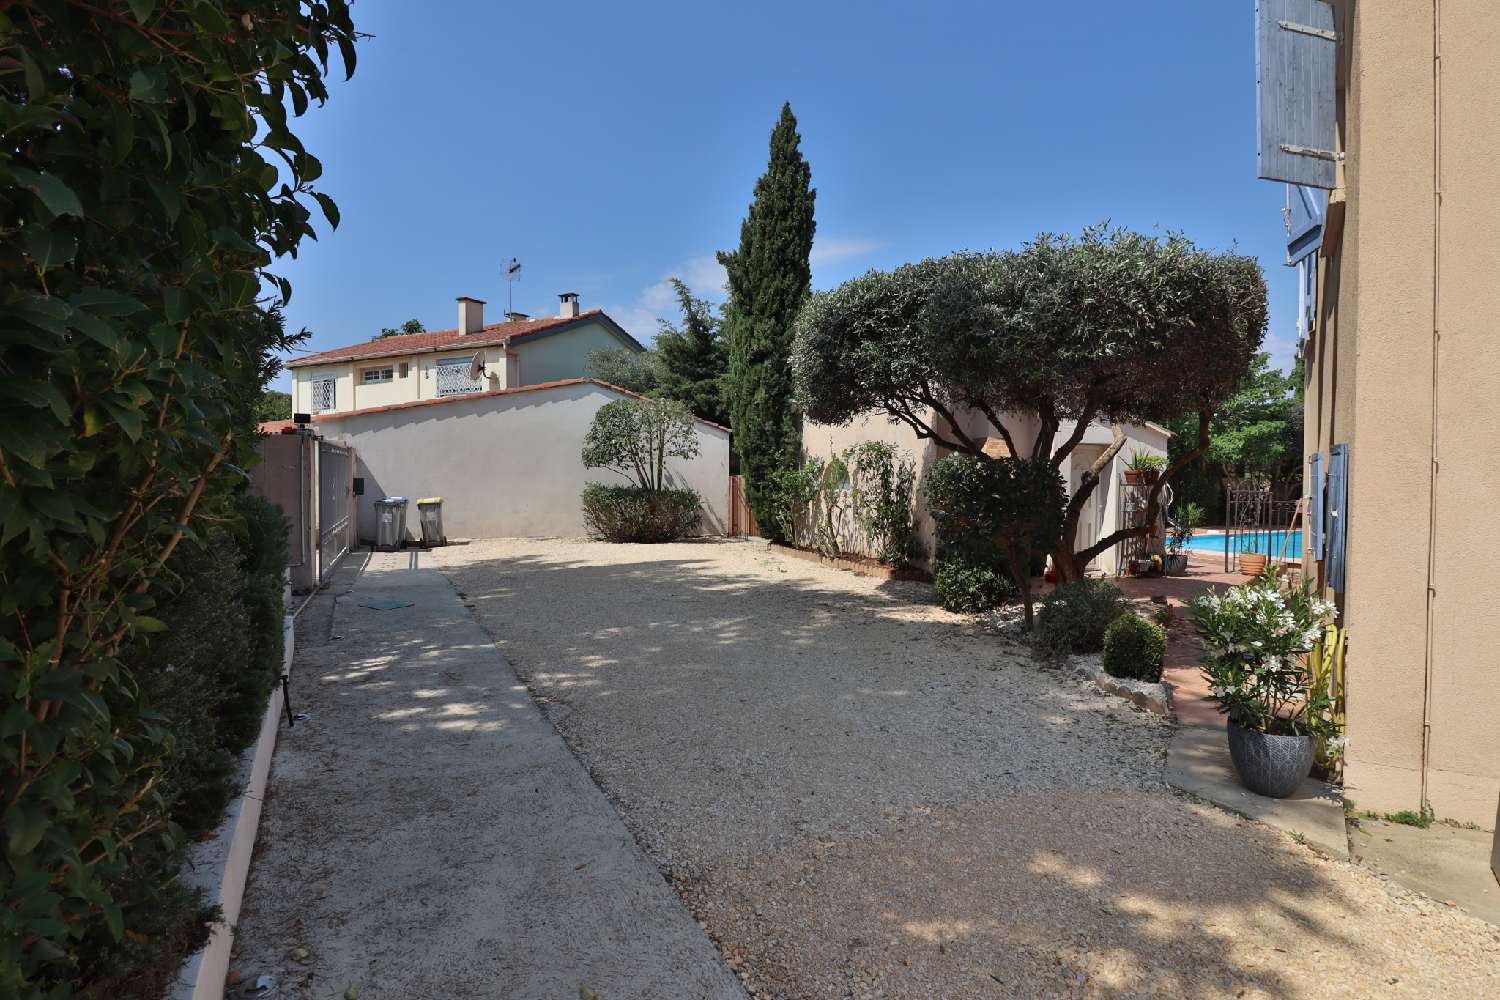  à vendre villa Bouillargues Gard 5